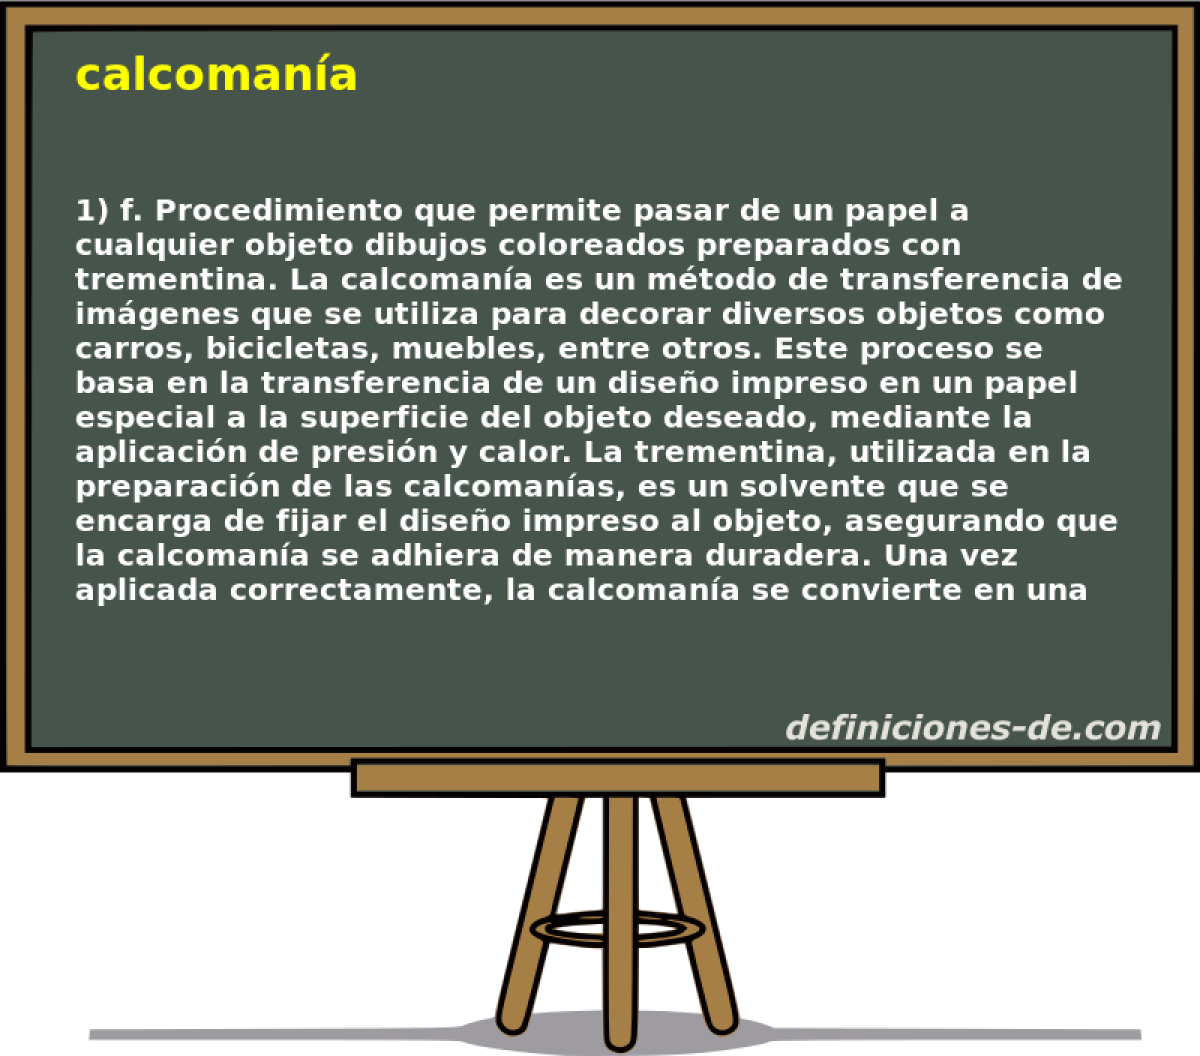 calcomana 